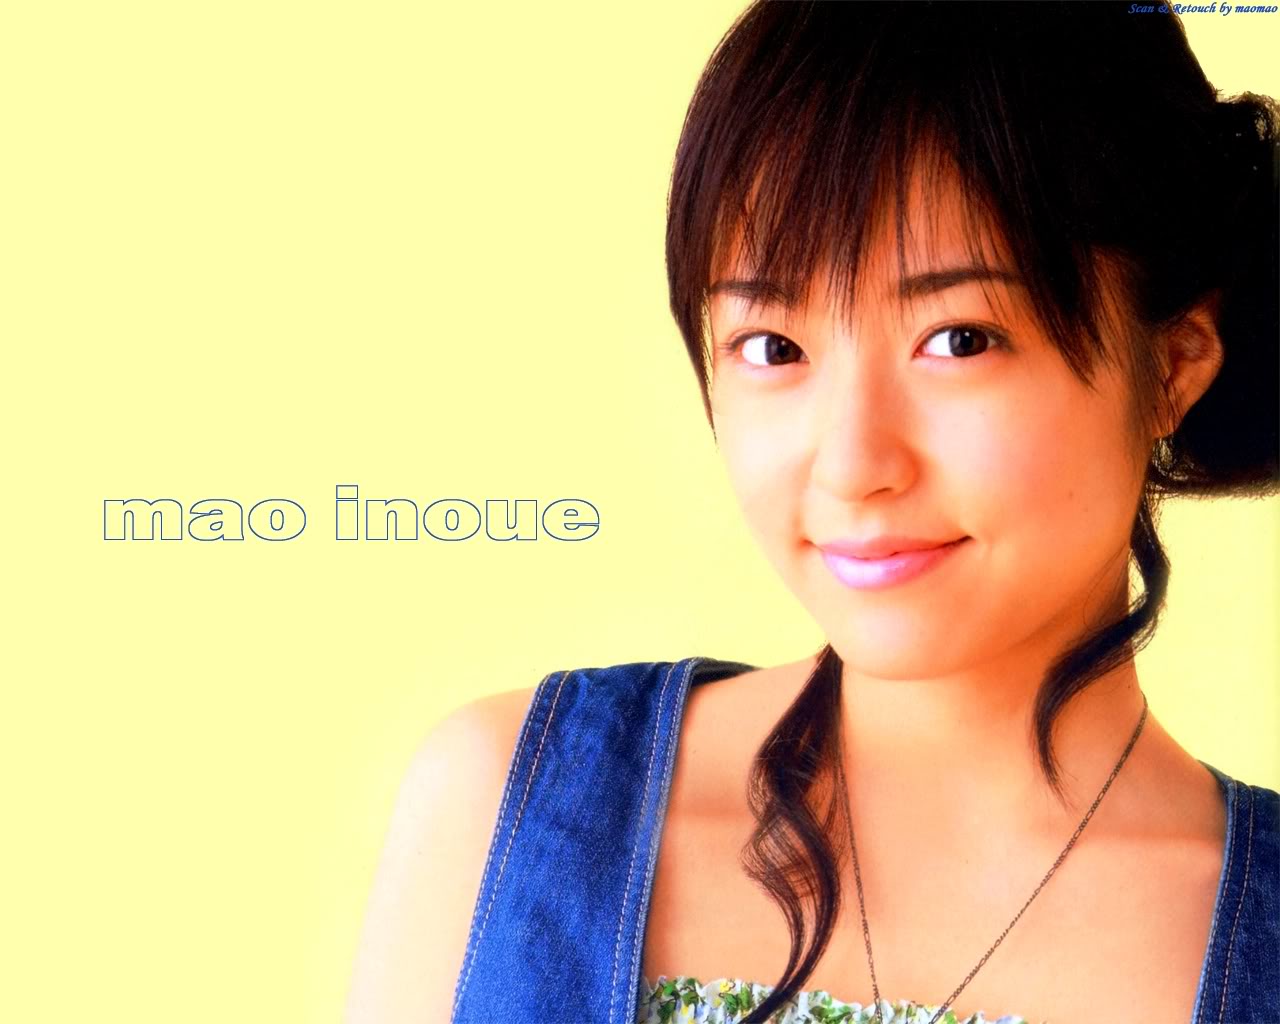 Home › Mao Inoue › Mao Inoue Wallpaper - JAPANESE ARTIST WALLPAPER ...